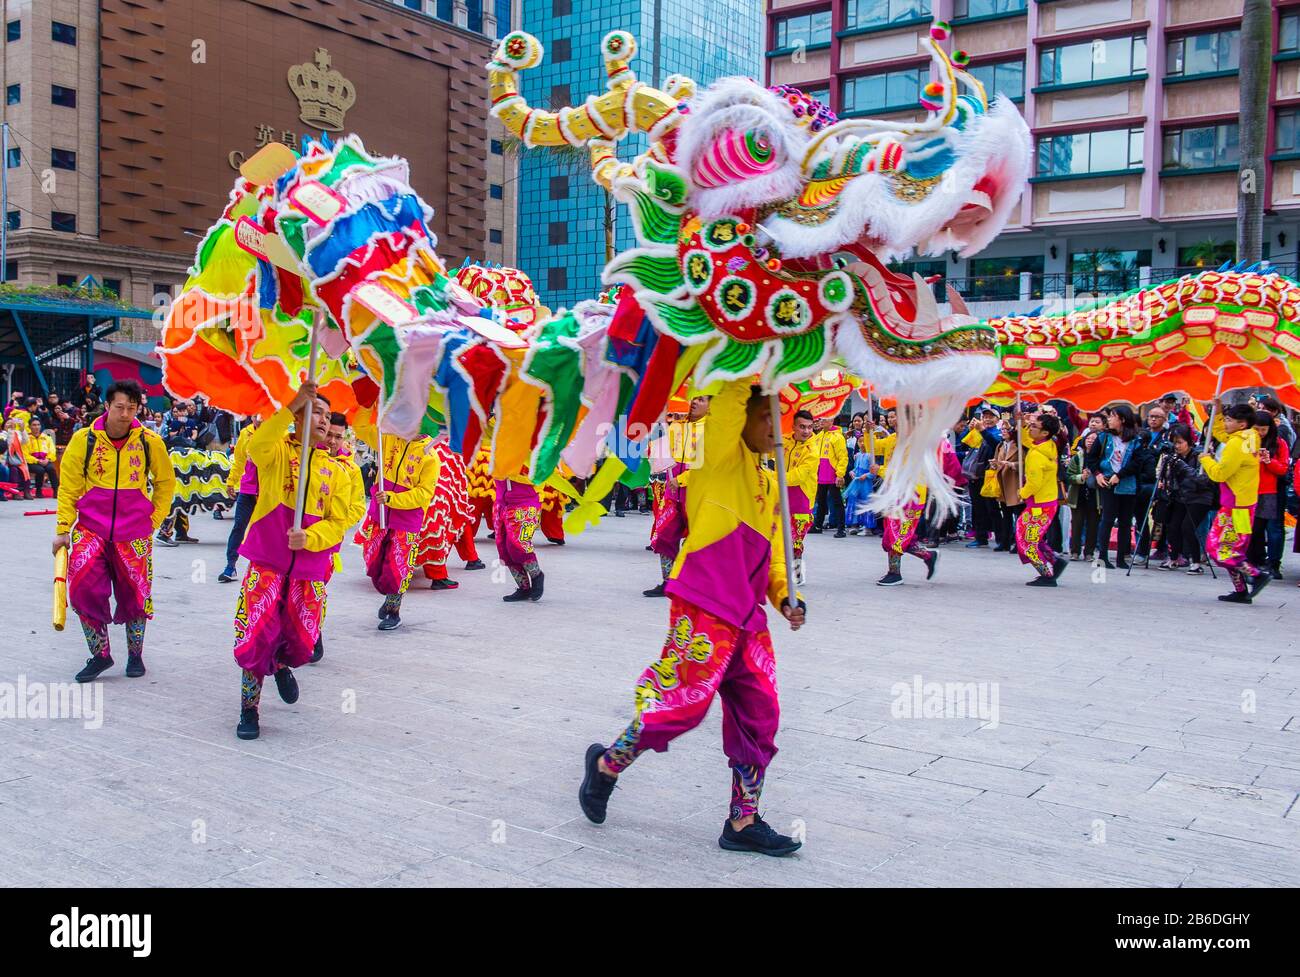 Dancers perform a Dragon dance during the Macau International Dragon and Lion Dance Day event at Praca da Amizade in Macau Stock Photo